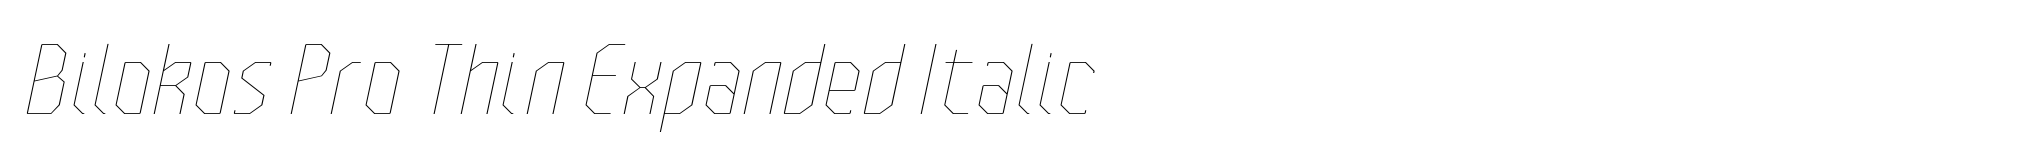 Bilokos Pro Thin Expanded Italic image